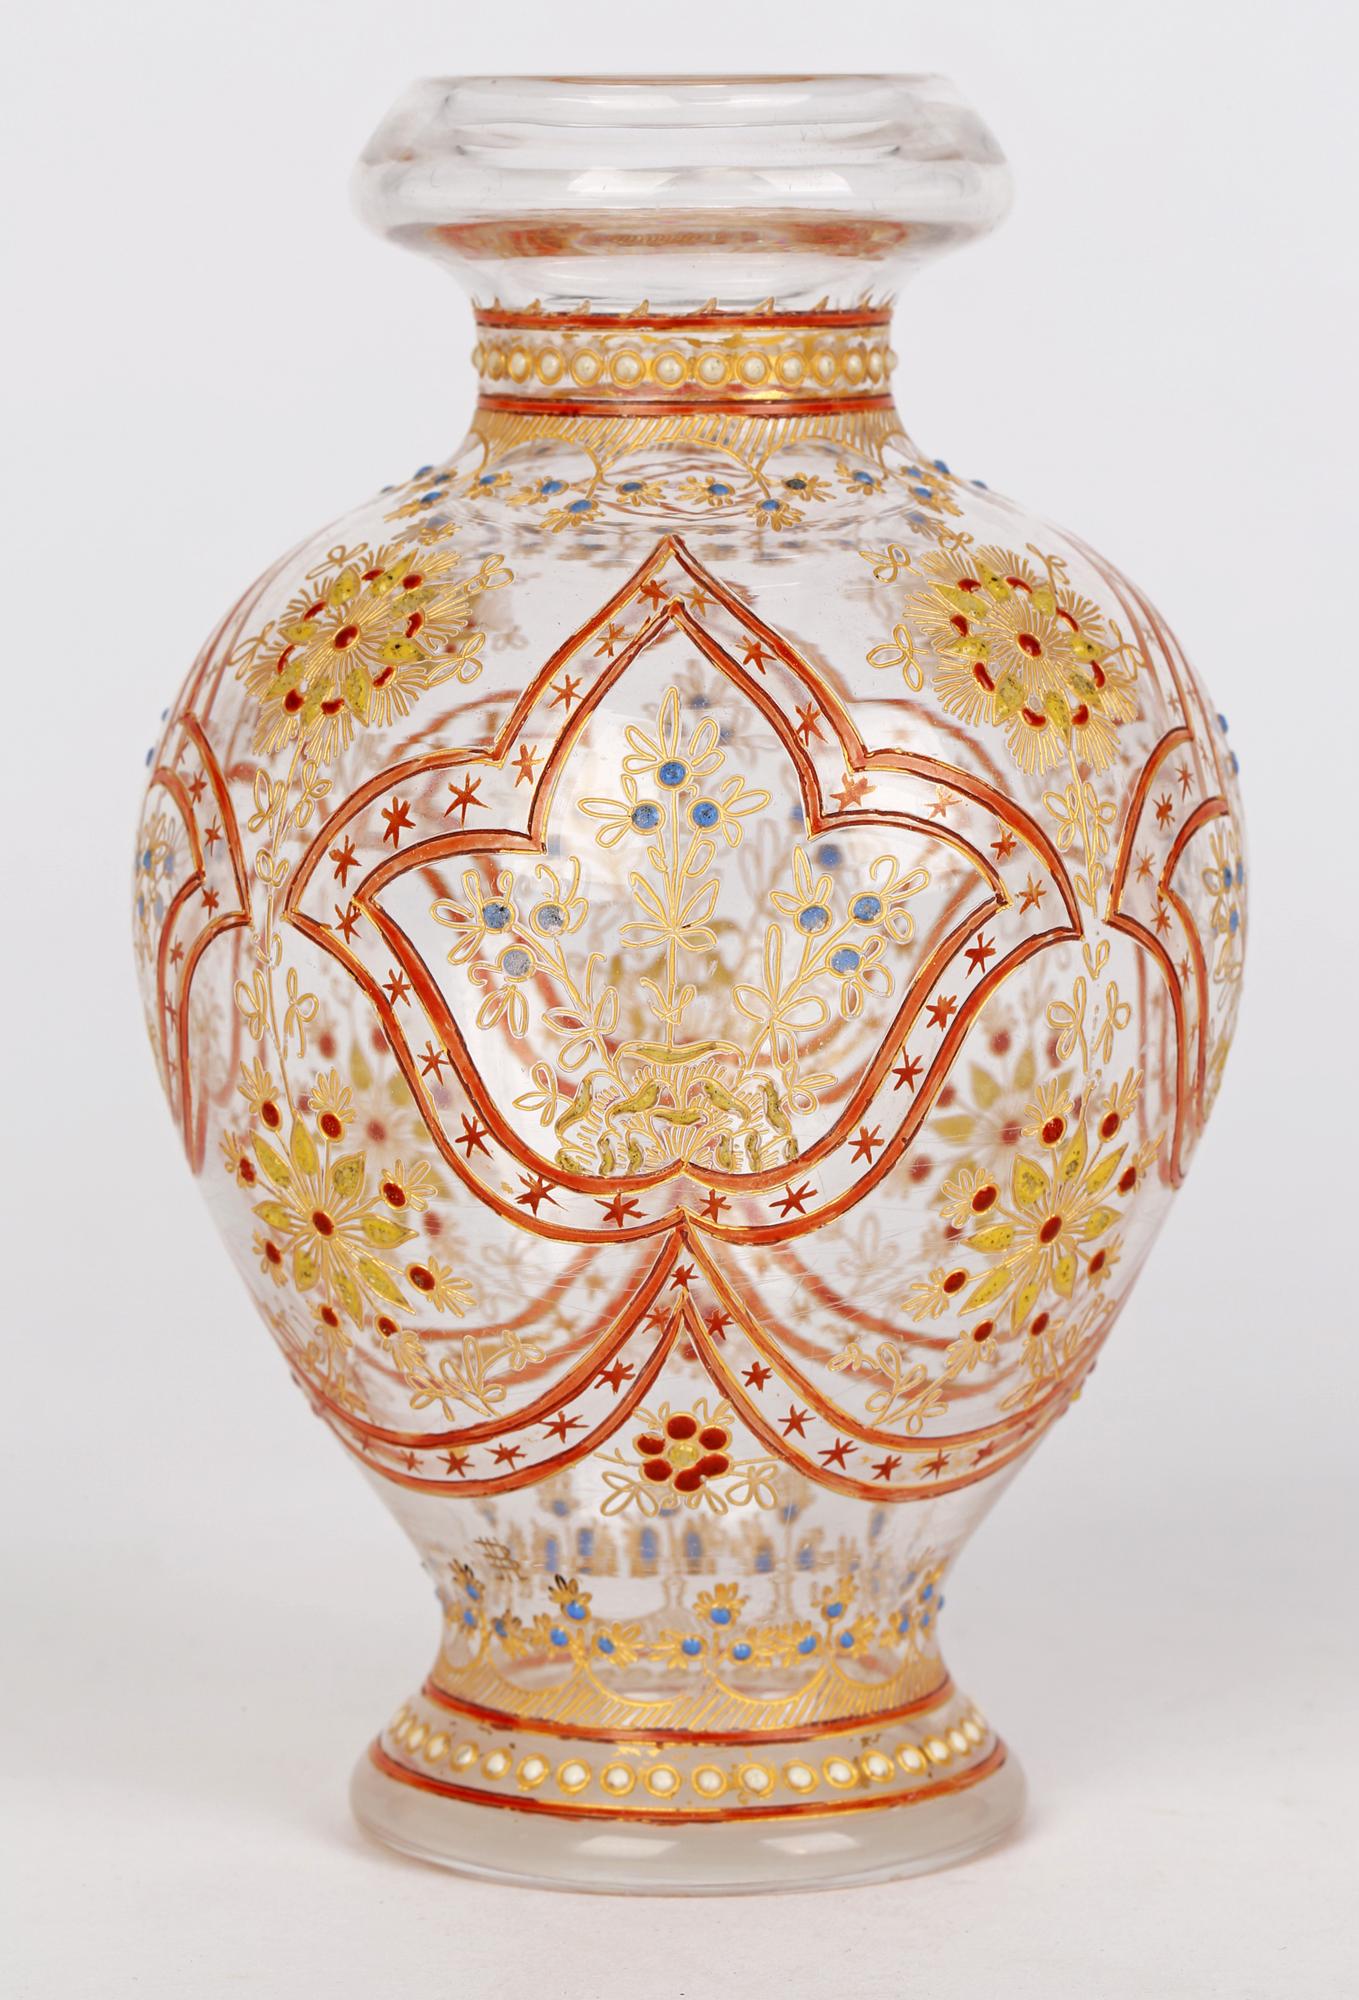 J & L Lobmeyr Viennese Enamelled Persian-Style Glass Vase For Sale 2